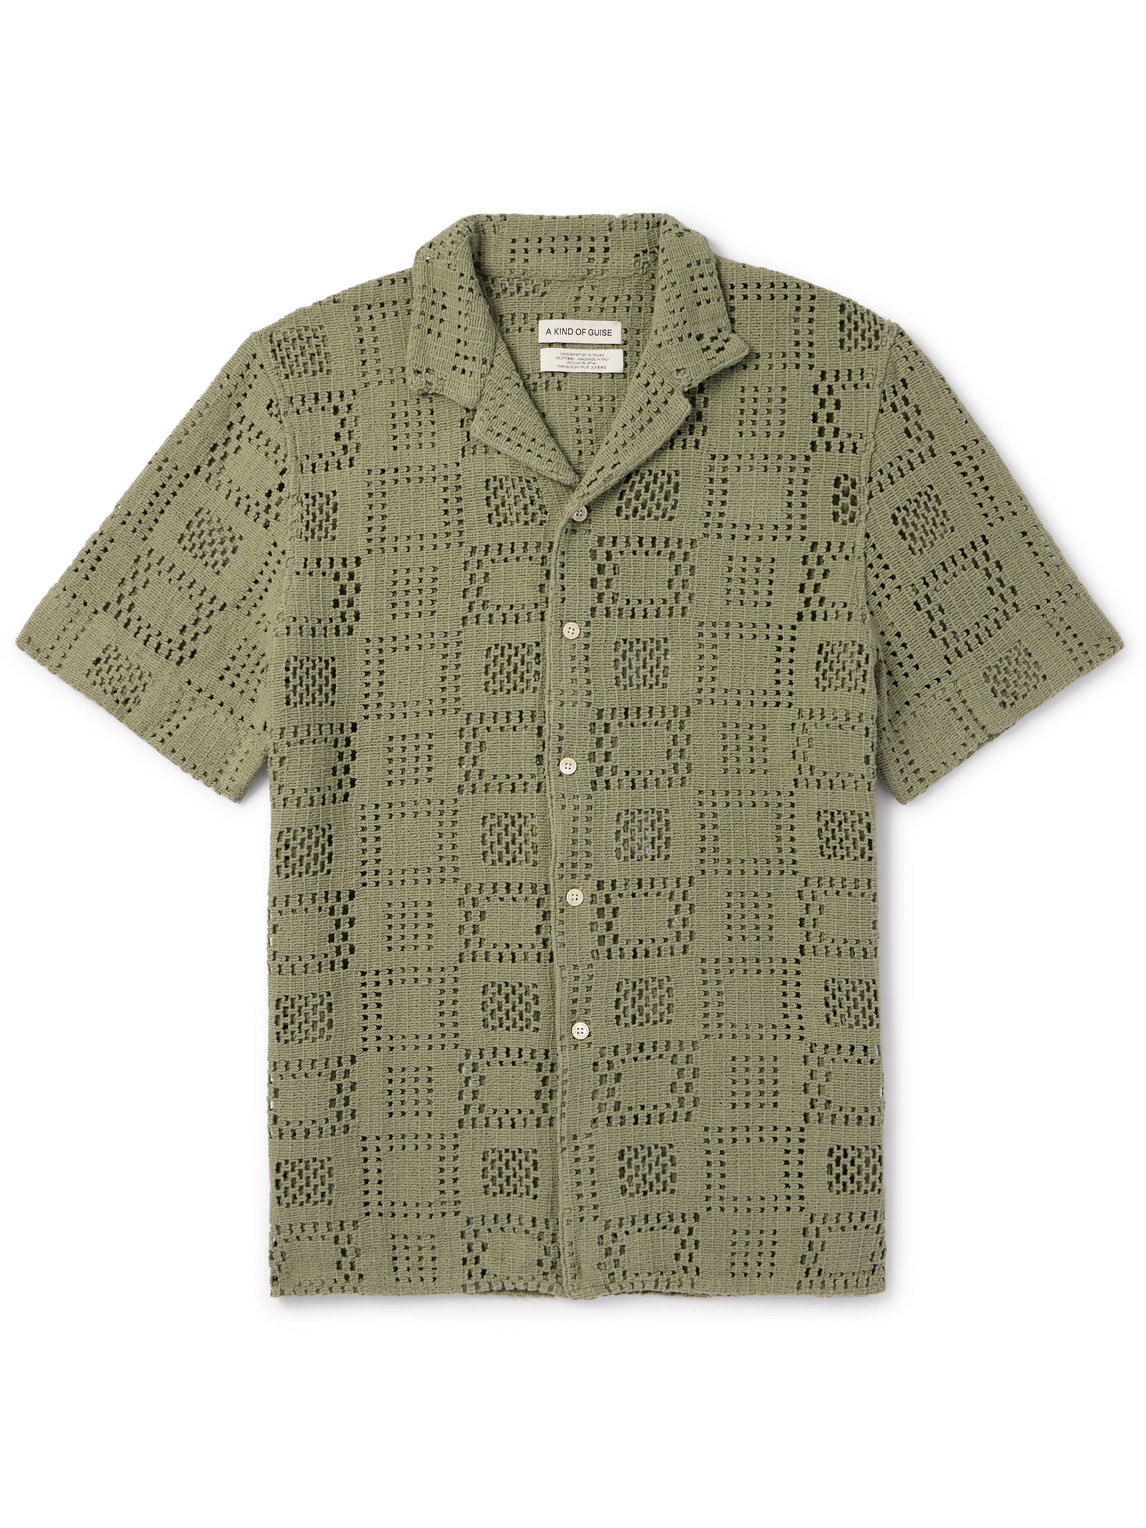 Gioia Camp-Collar Crocheted Cotton Shirt